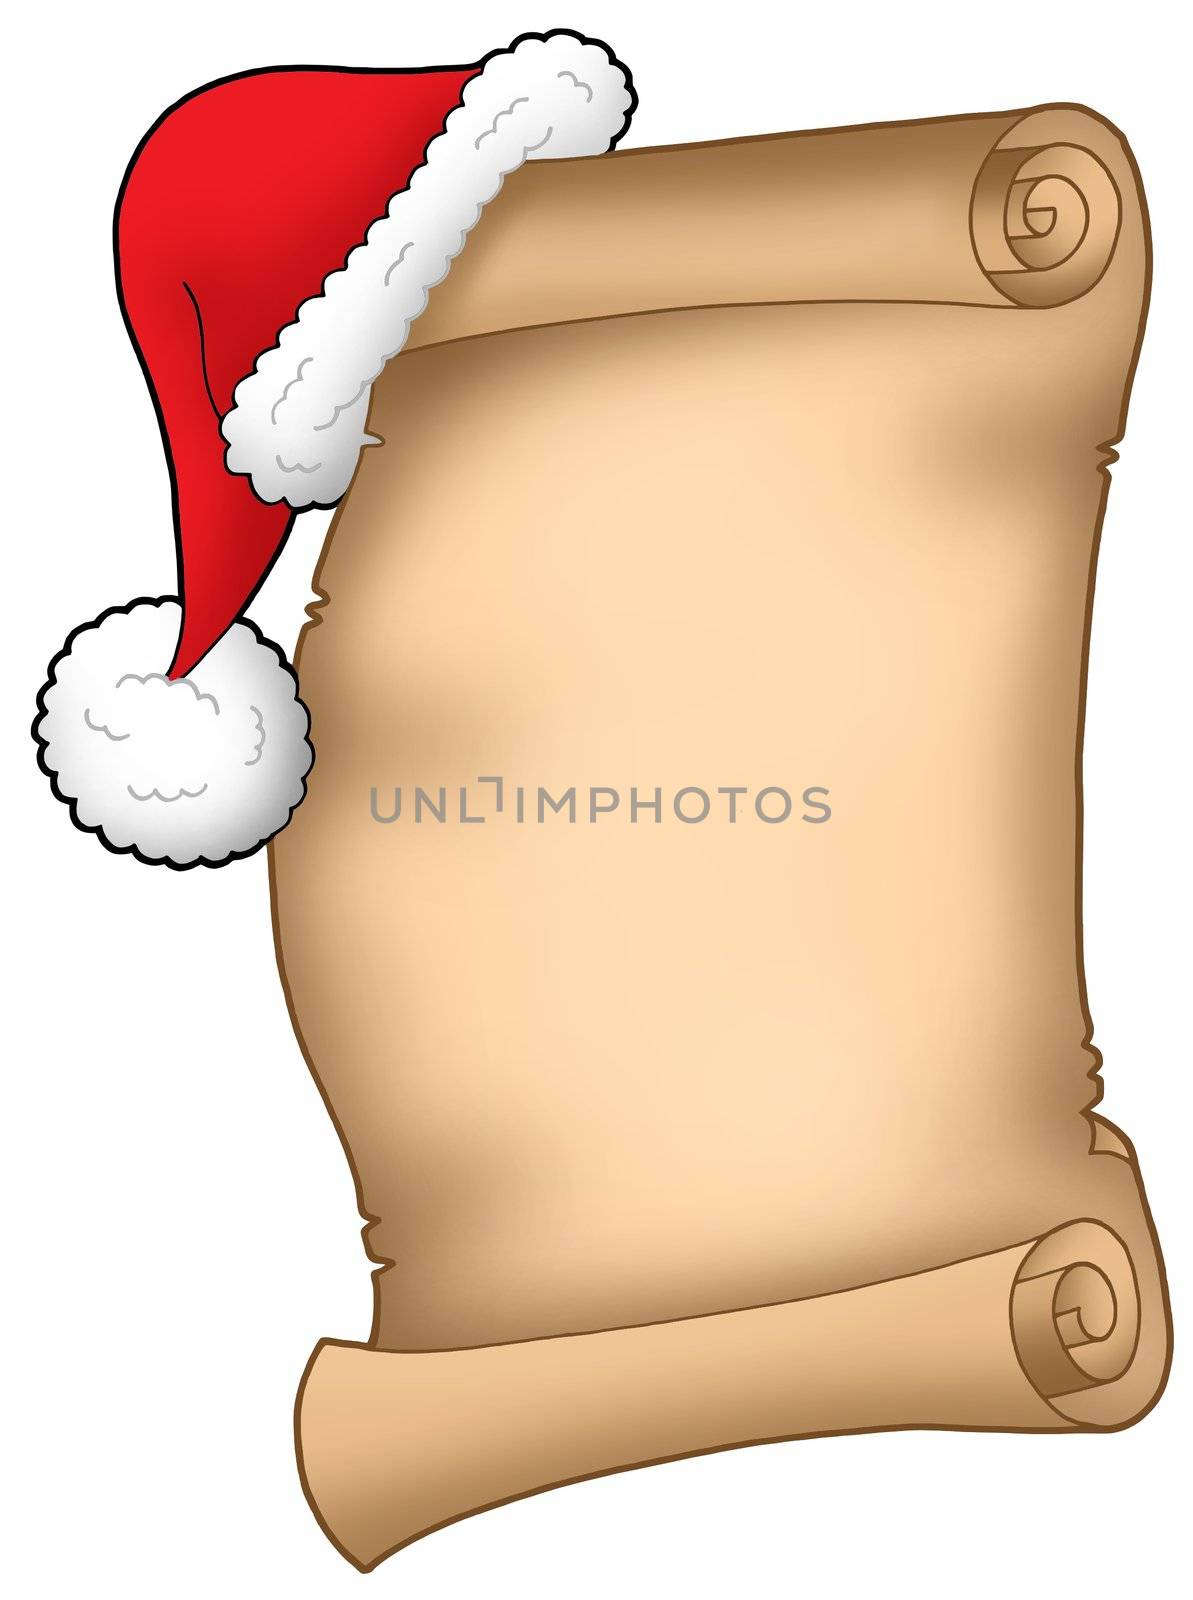 Santa Claus wish list - color illustration.